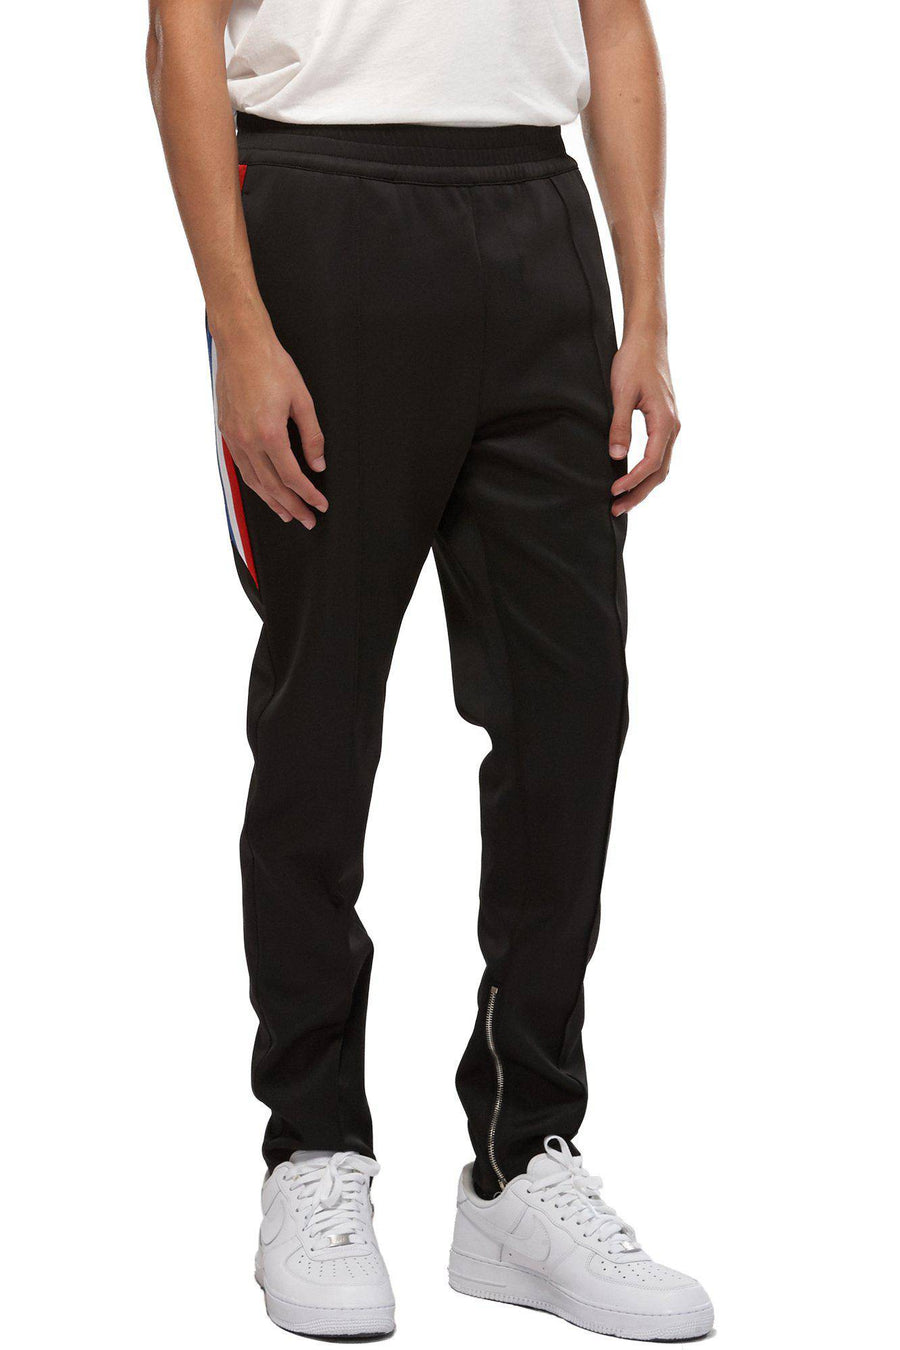 Konus Men's Track Pants With Knit Tape detail in Black - shopatkonus